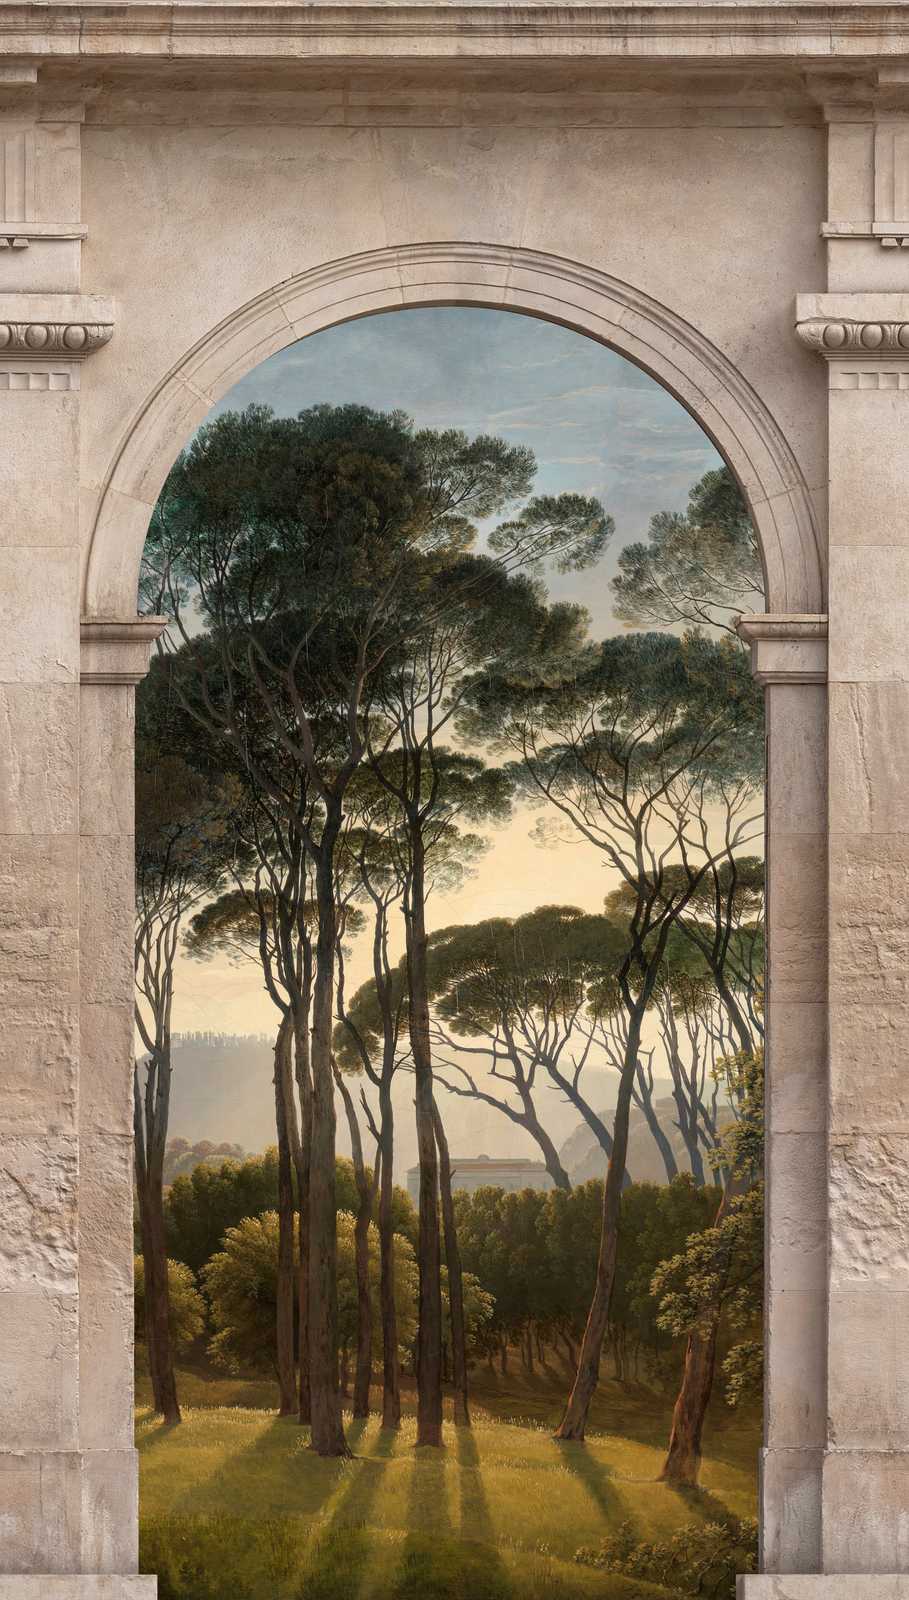             Wallpaper novelty - 3D motif wallpaper antique archway & landscape image
        